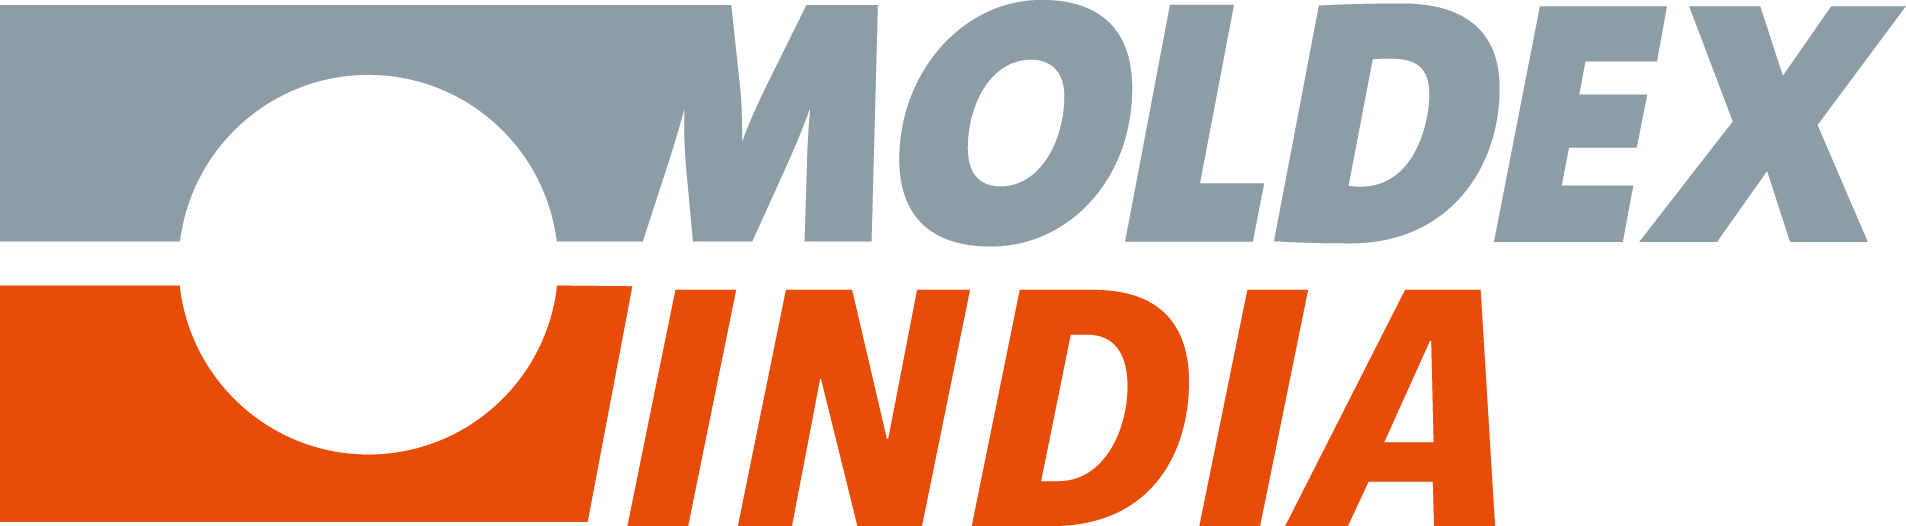 Moldex India Logo